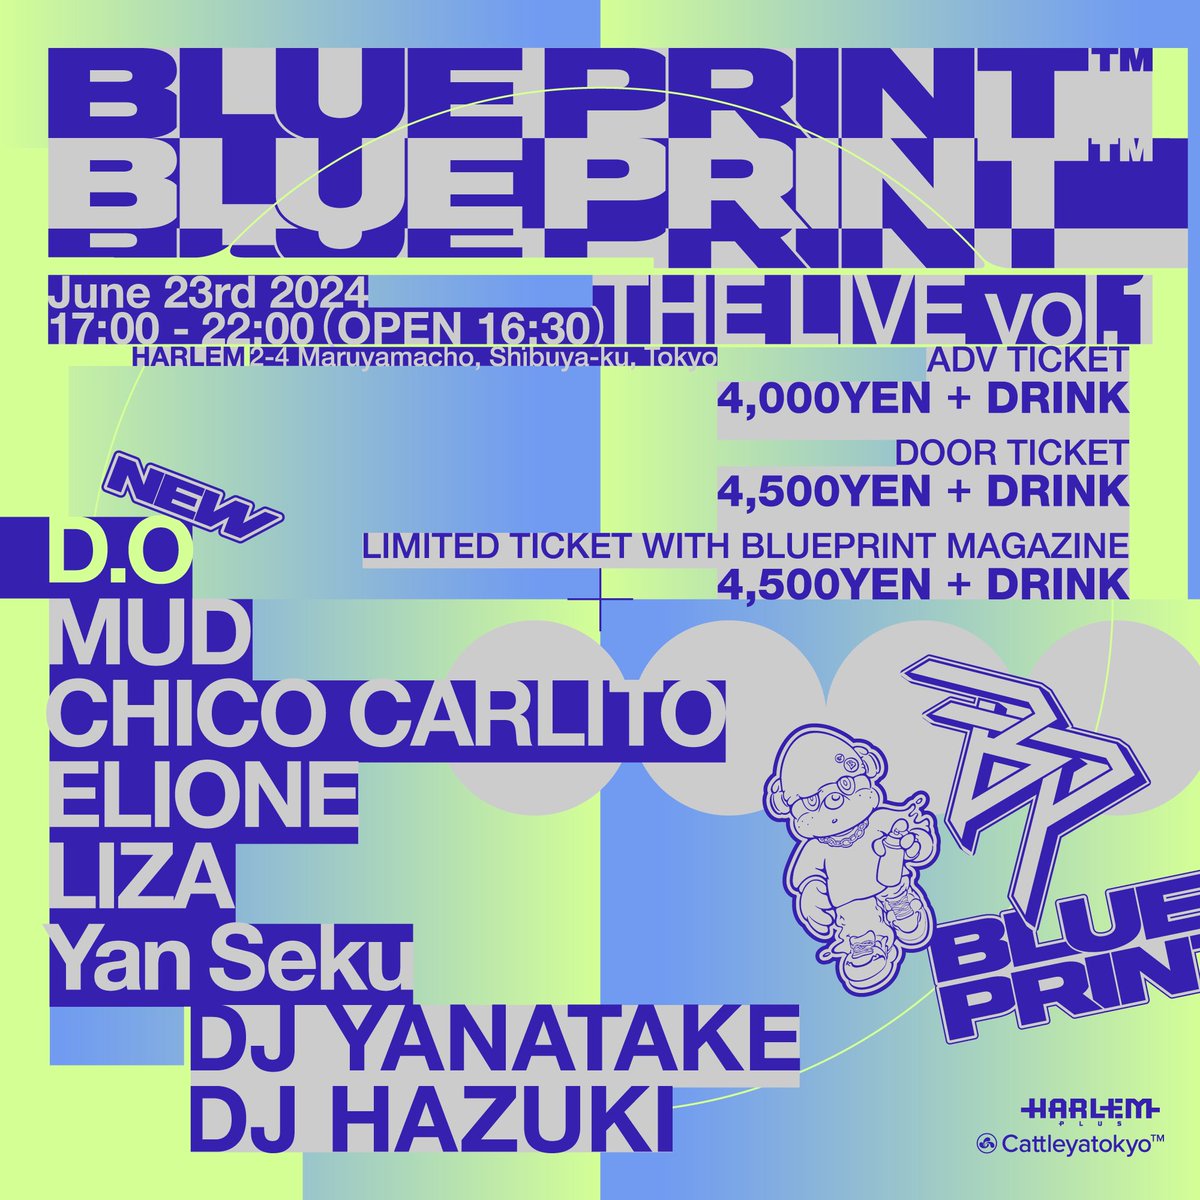 【#6月】 06.23.Sun 〓BLUEPRINTTM THE LIVE vol.1〓 @club_HARLEM 渋谷 OPEN 16:30 / CLOSE 22:00 ▪︎Live D.O MUD CHICO CARLITO ELIONE LIZA Yan Seku ▪︎DJ DJ YANATAKE DJ HAZUKI ▷info instagram.com/blue_print_jp?… #東京